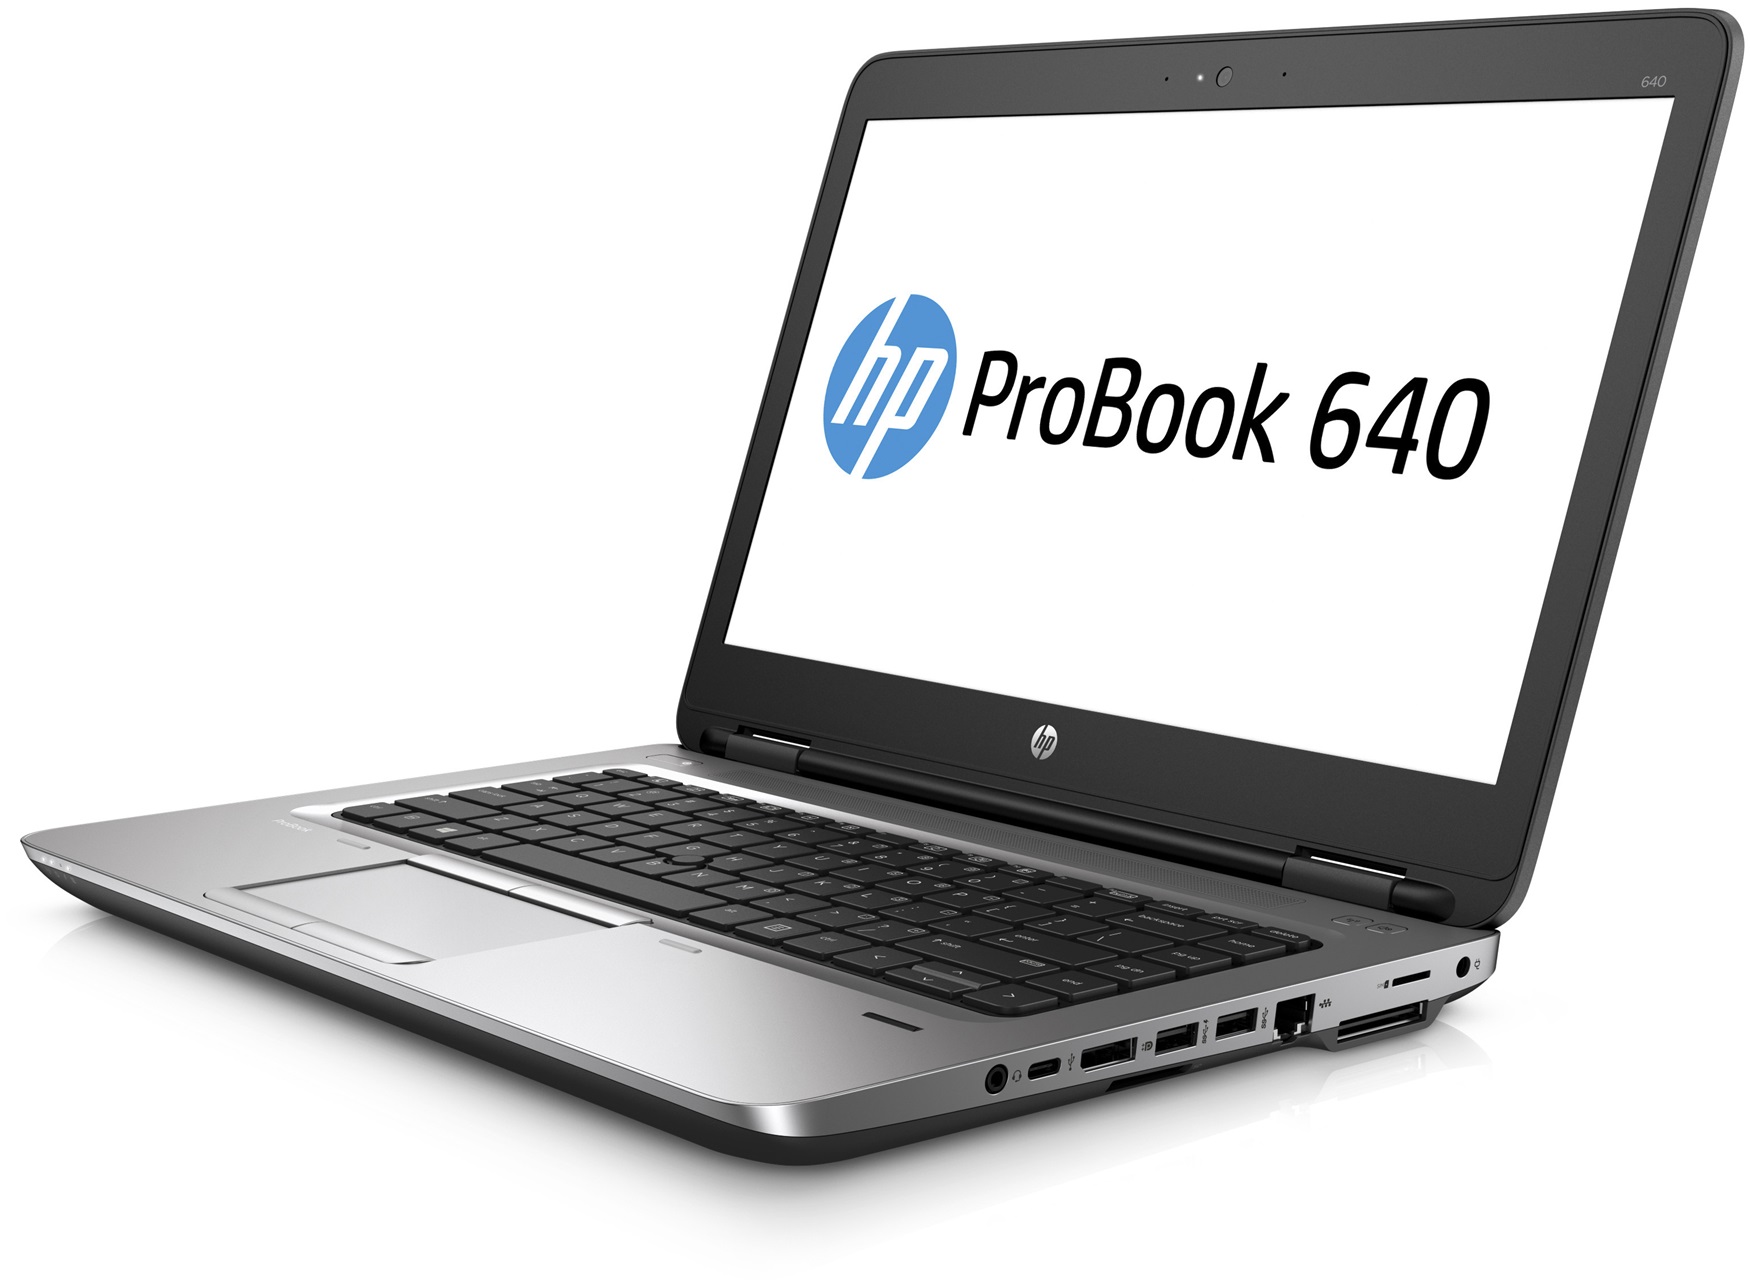 Portátil HP Probook 640 G2 GRADO B (Intel Core i5 6200U 2.3Ghz/8GB/240SSD-M.2/14FHD/DVD/W10P) Preinstalado